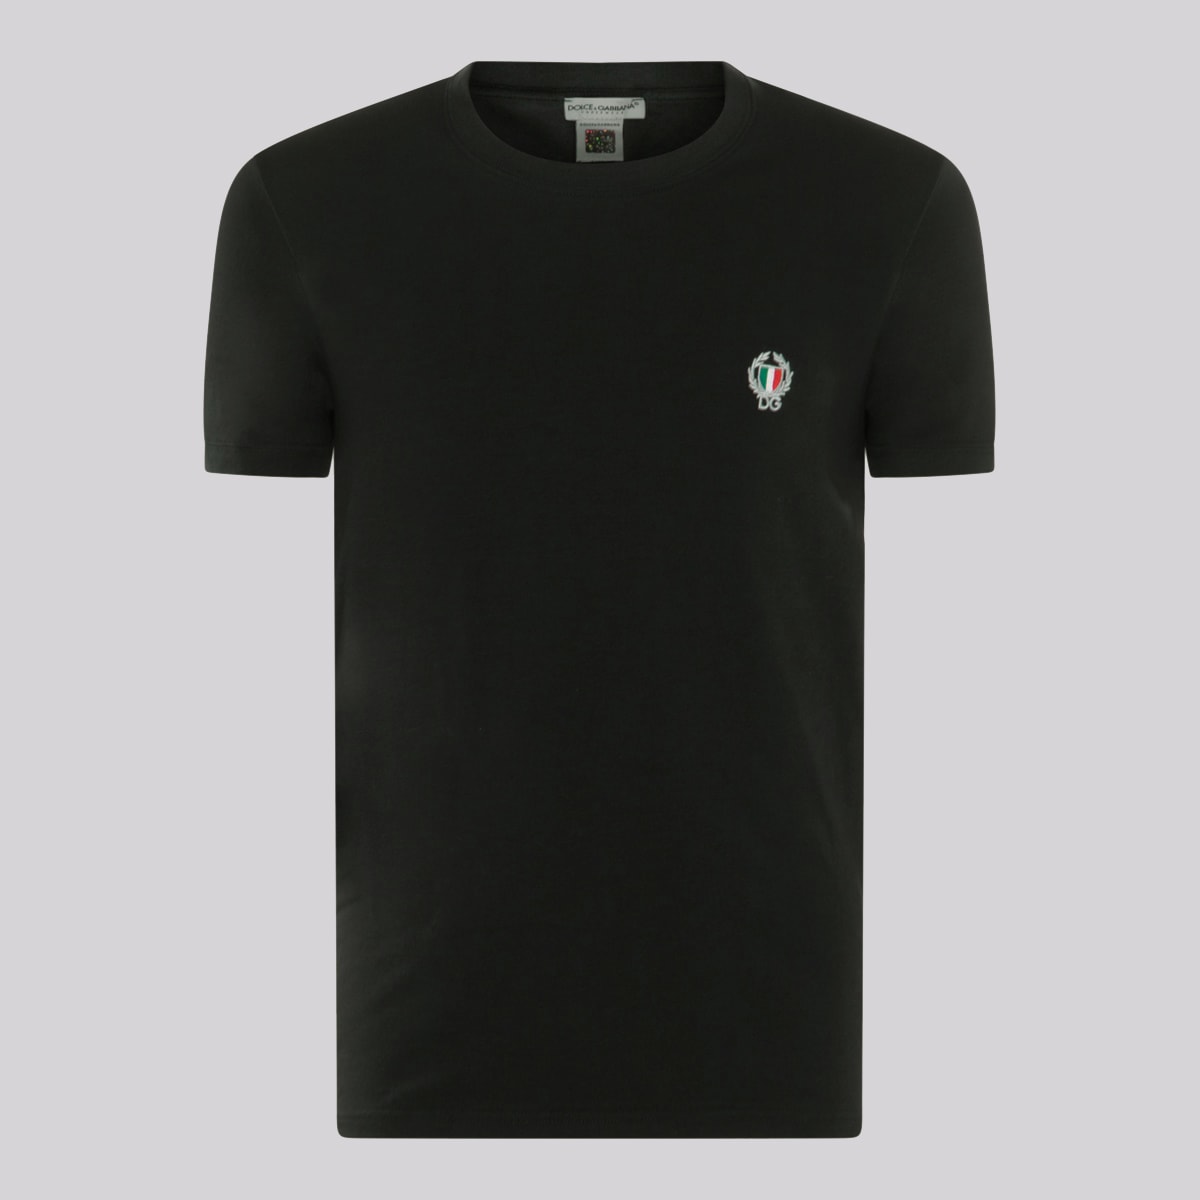 Dolce & Gabbana Black Cotton Blend T-shirt